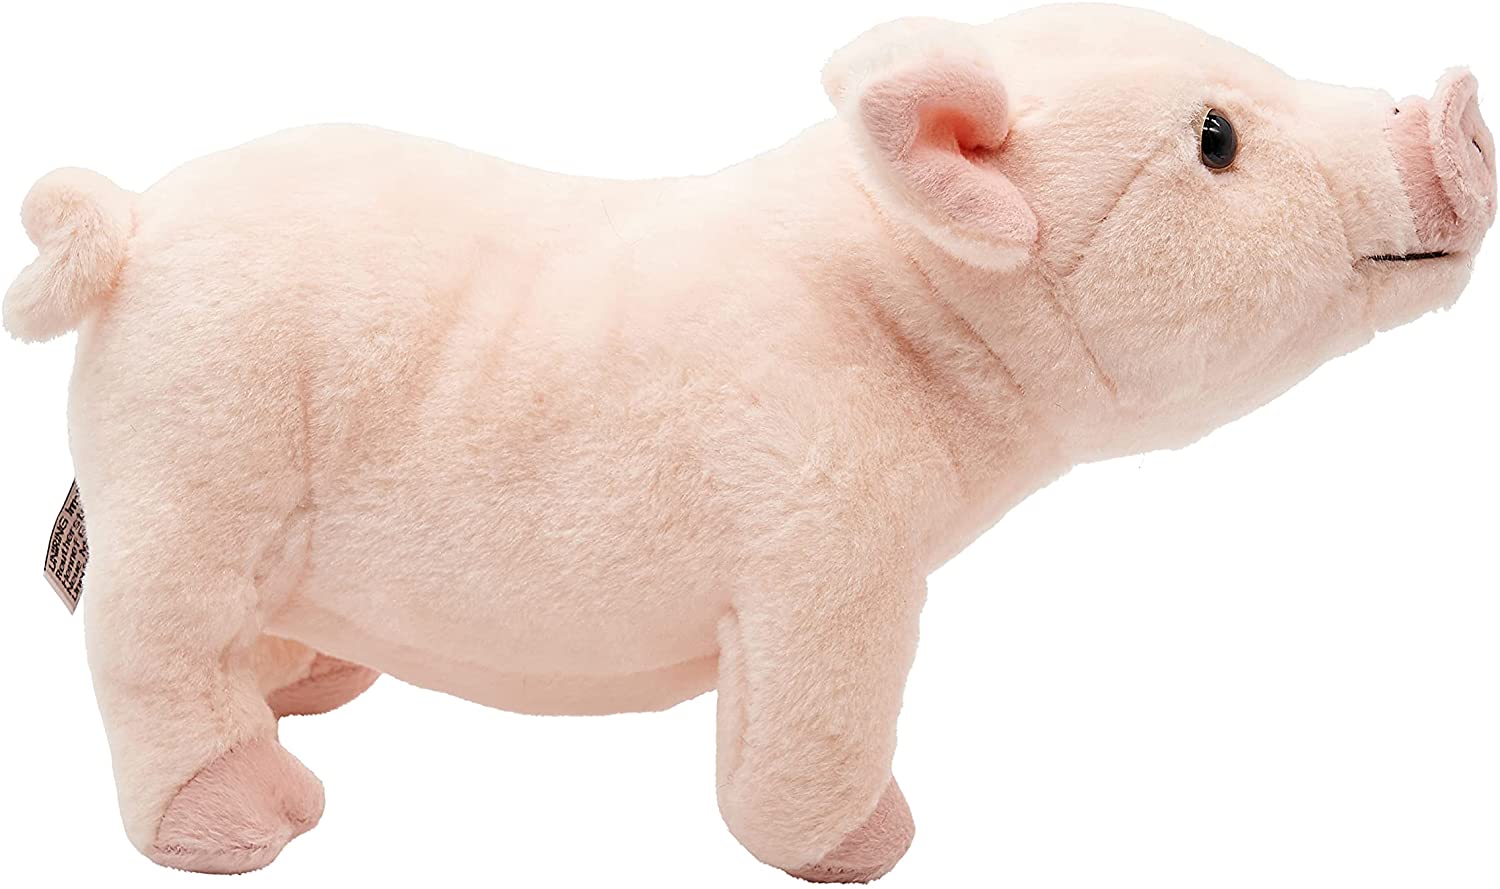  pig pink - 28 cm (length)